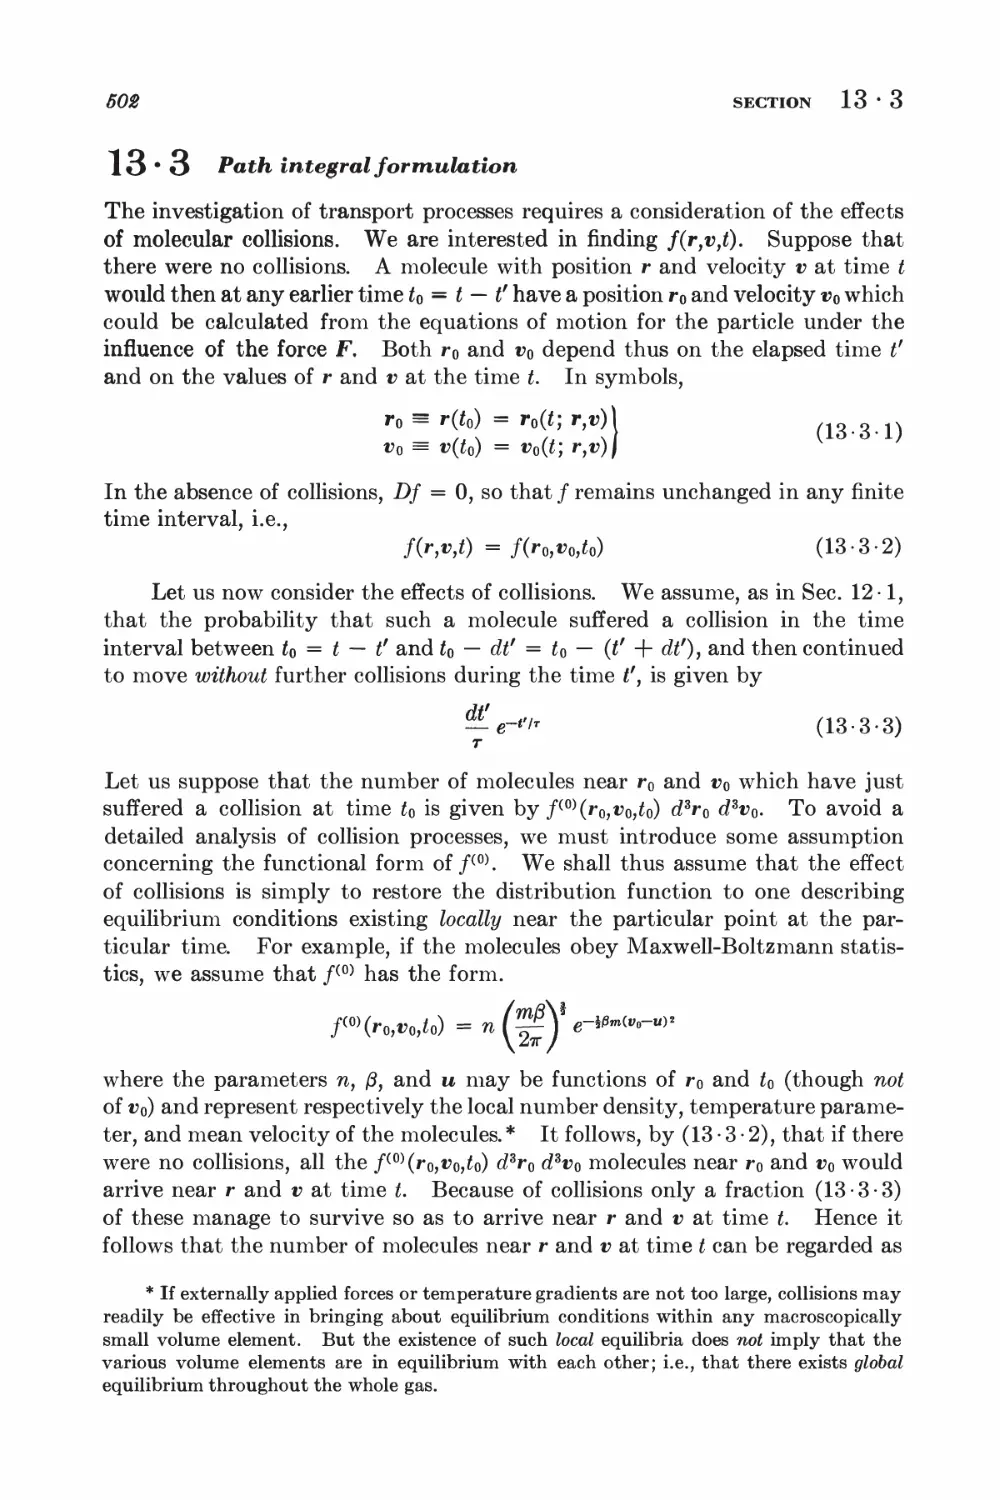 13.3 Path integral formulation